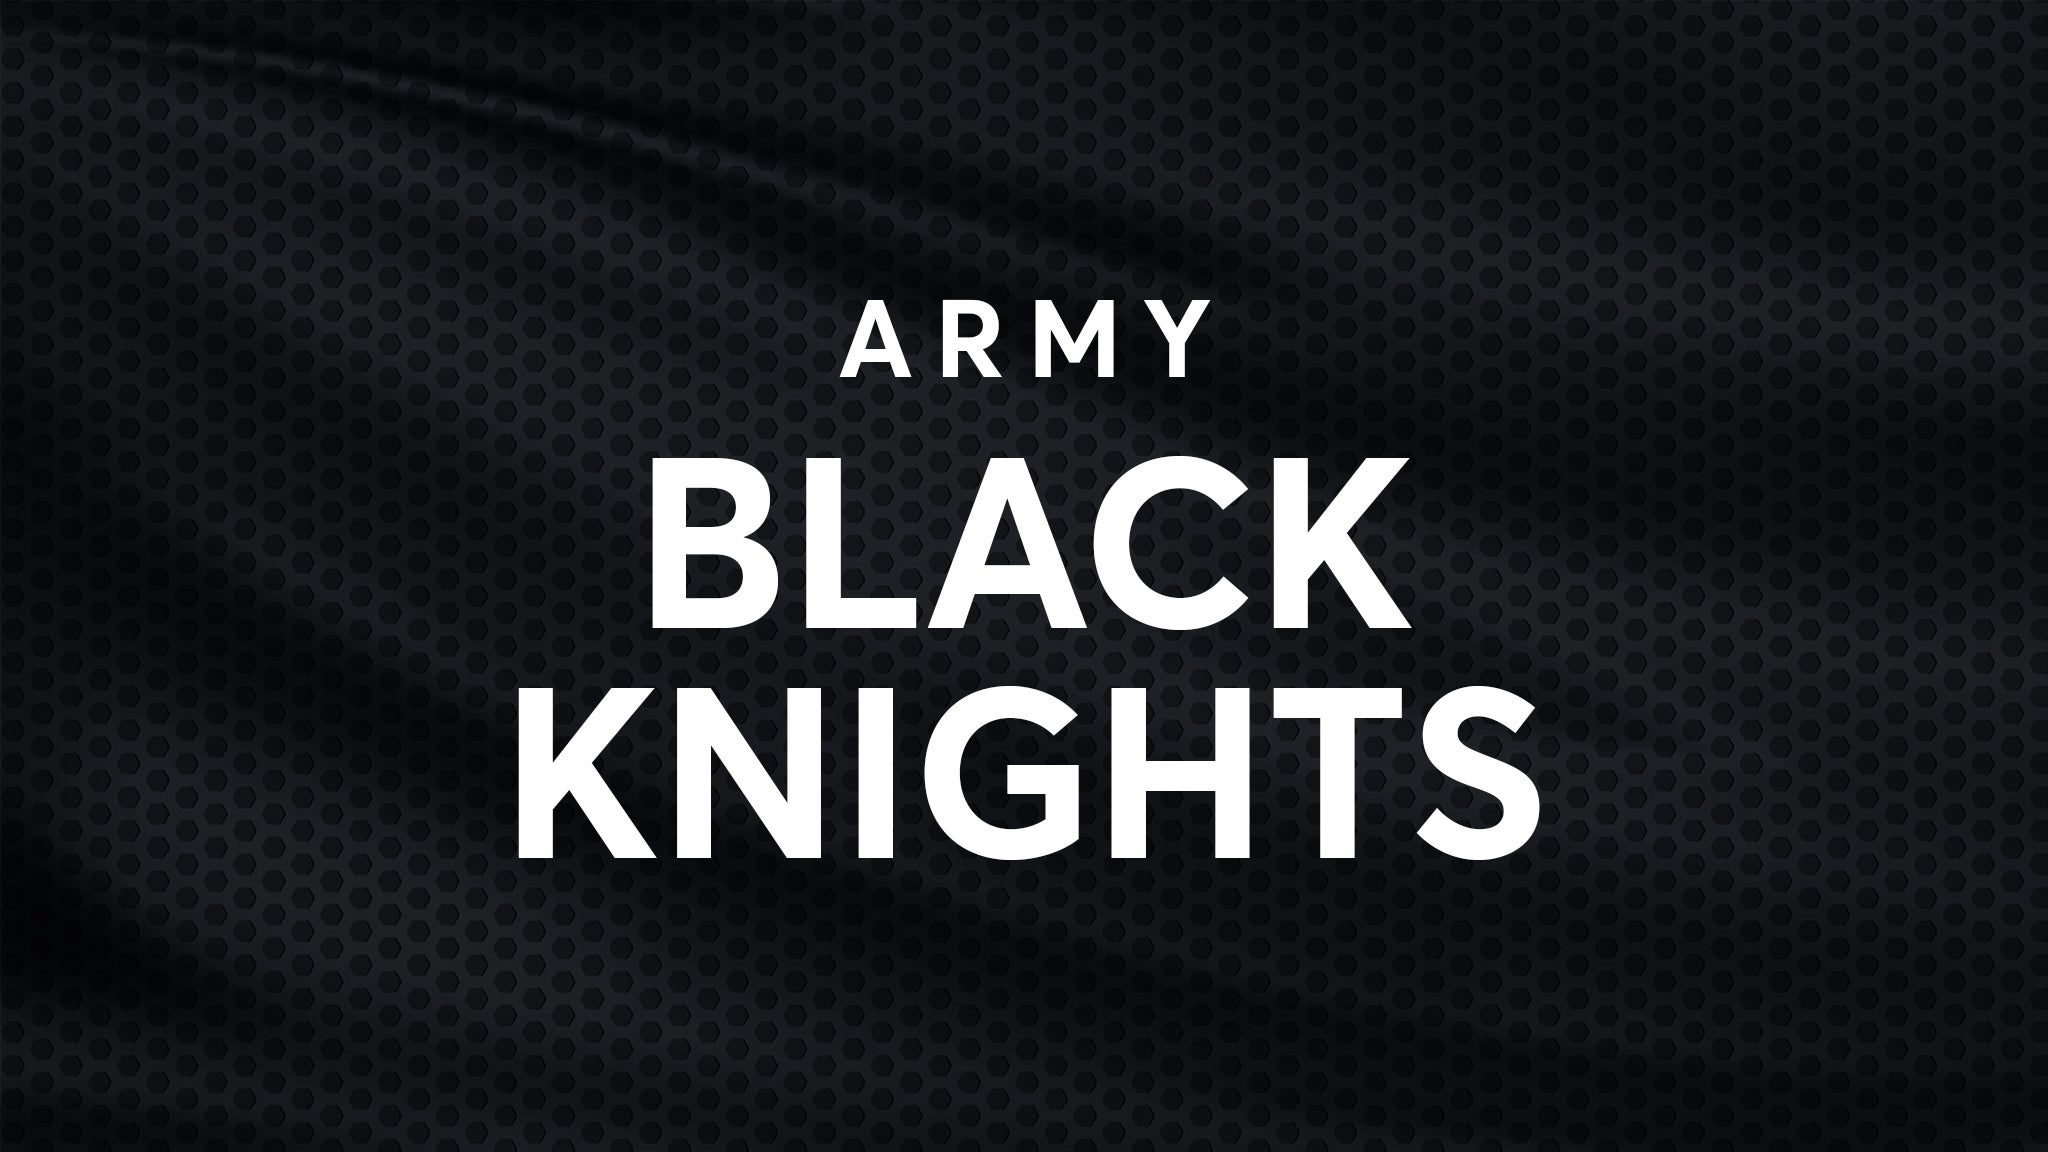 Army Black Knights Football vs. Air Force Academy Falcons Football hero